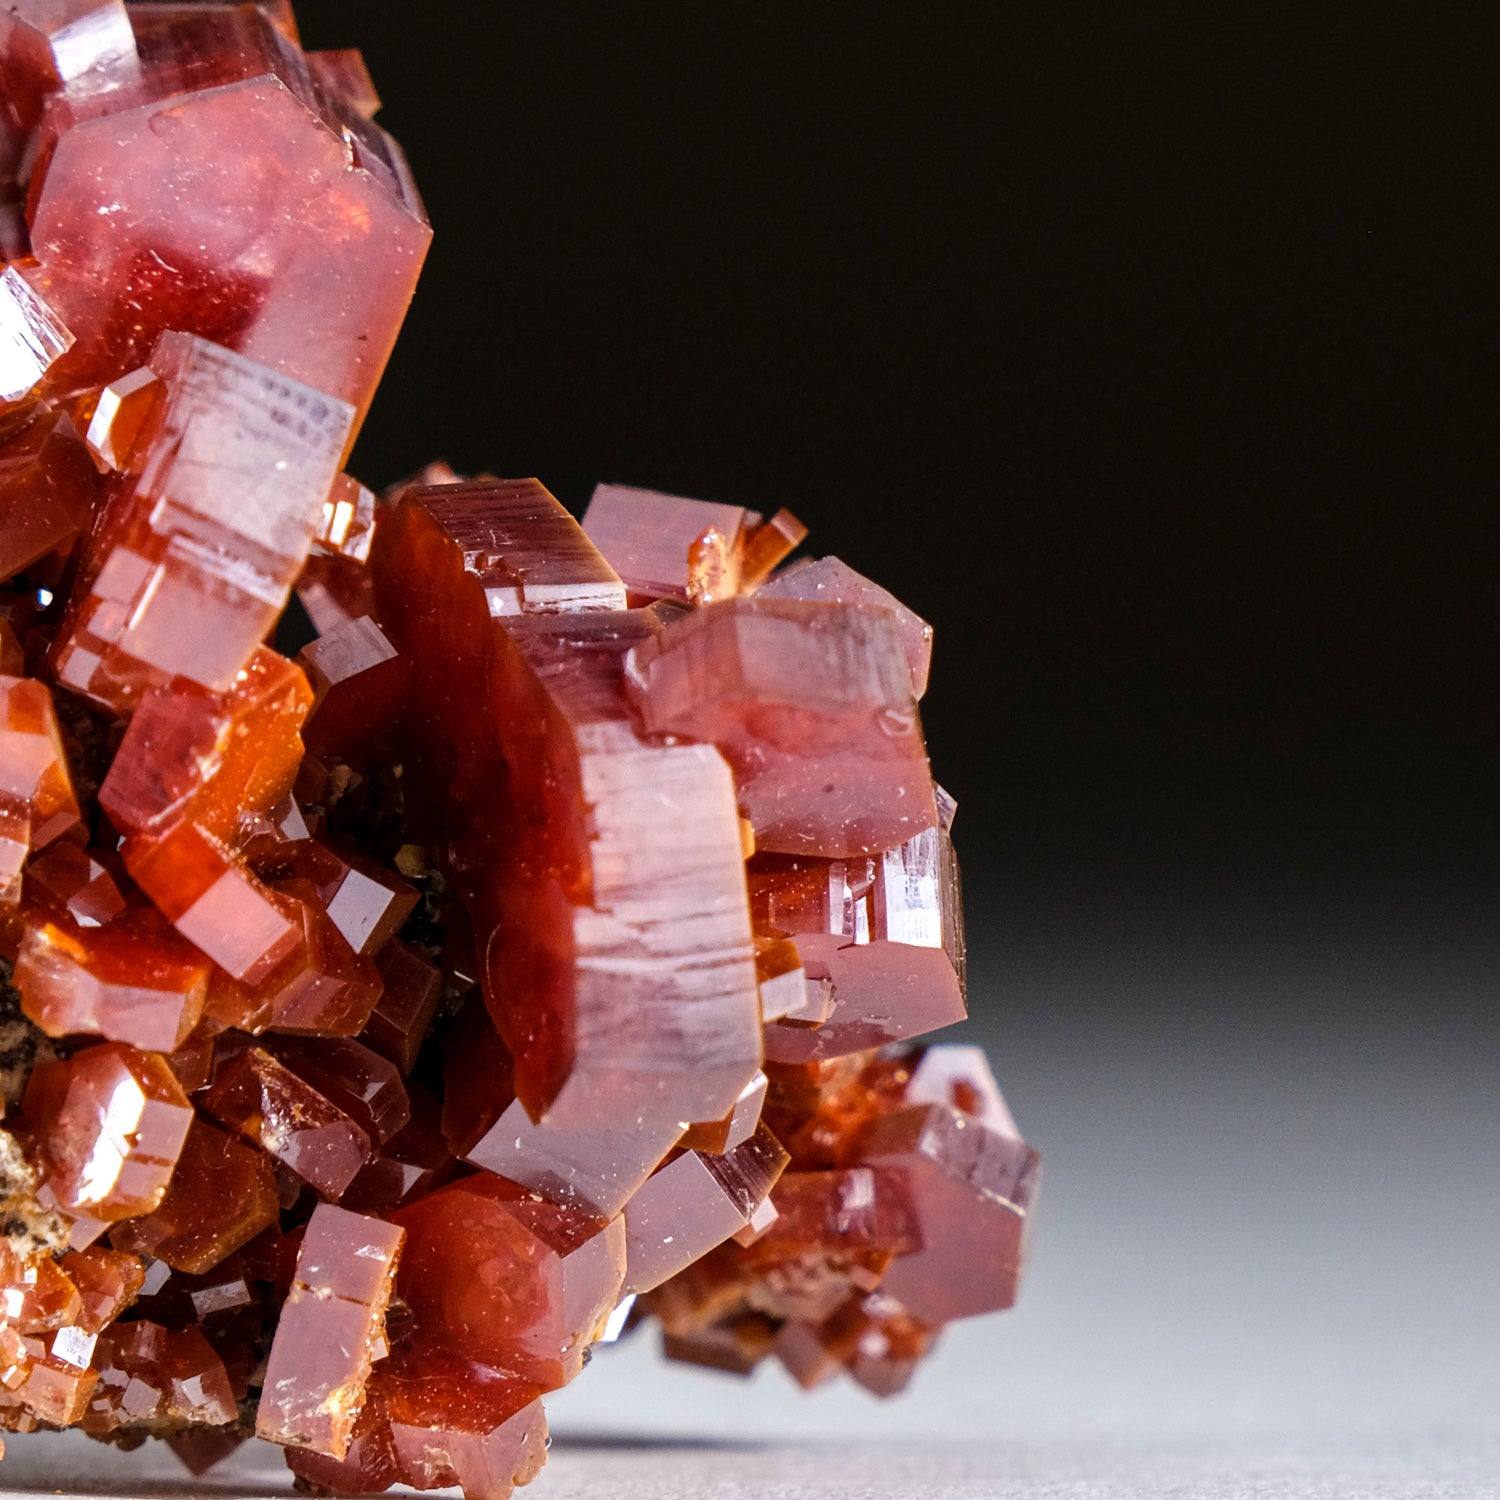 Genuine Vanadinite Crystal Cluster on Matrix from Morocco (63.3 grams)